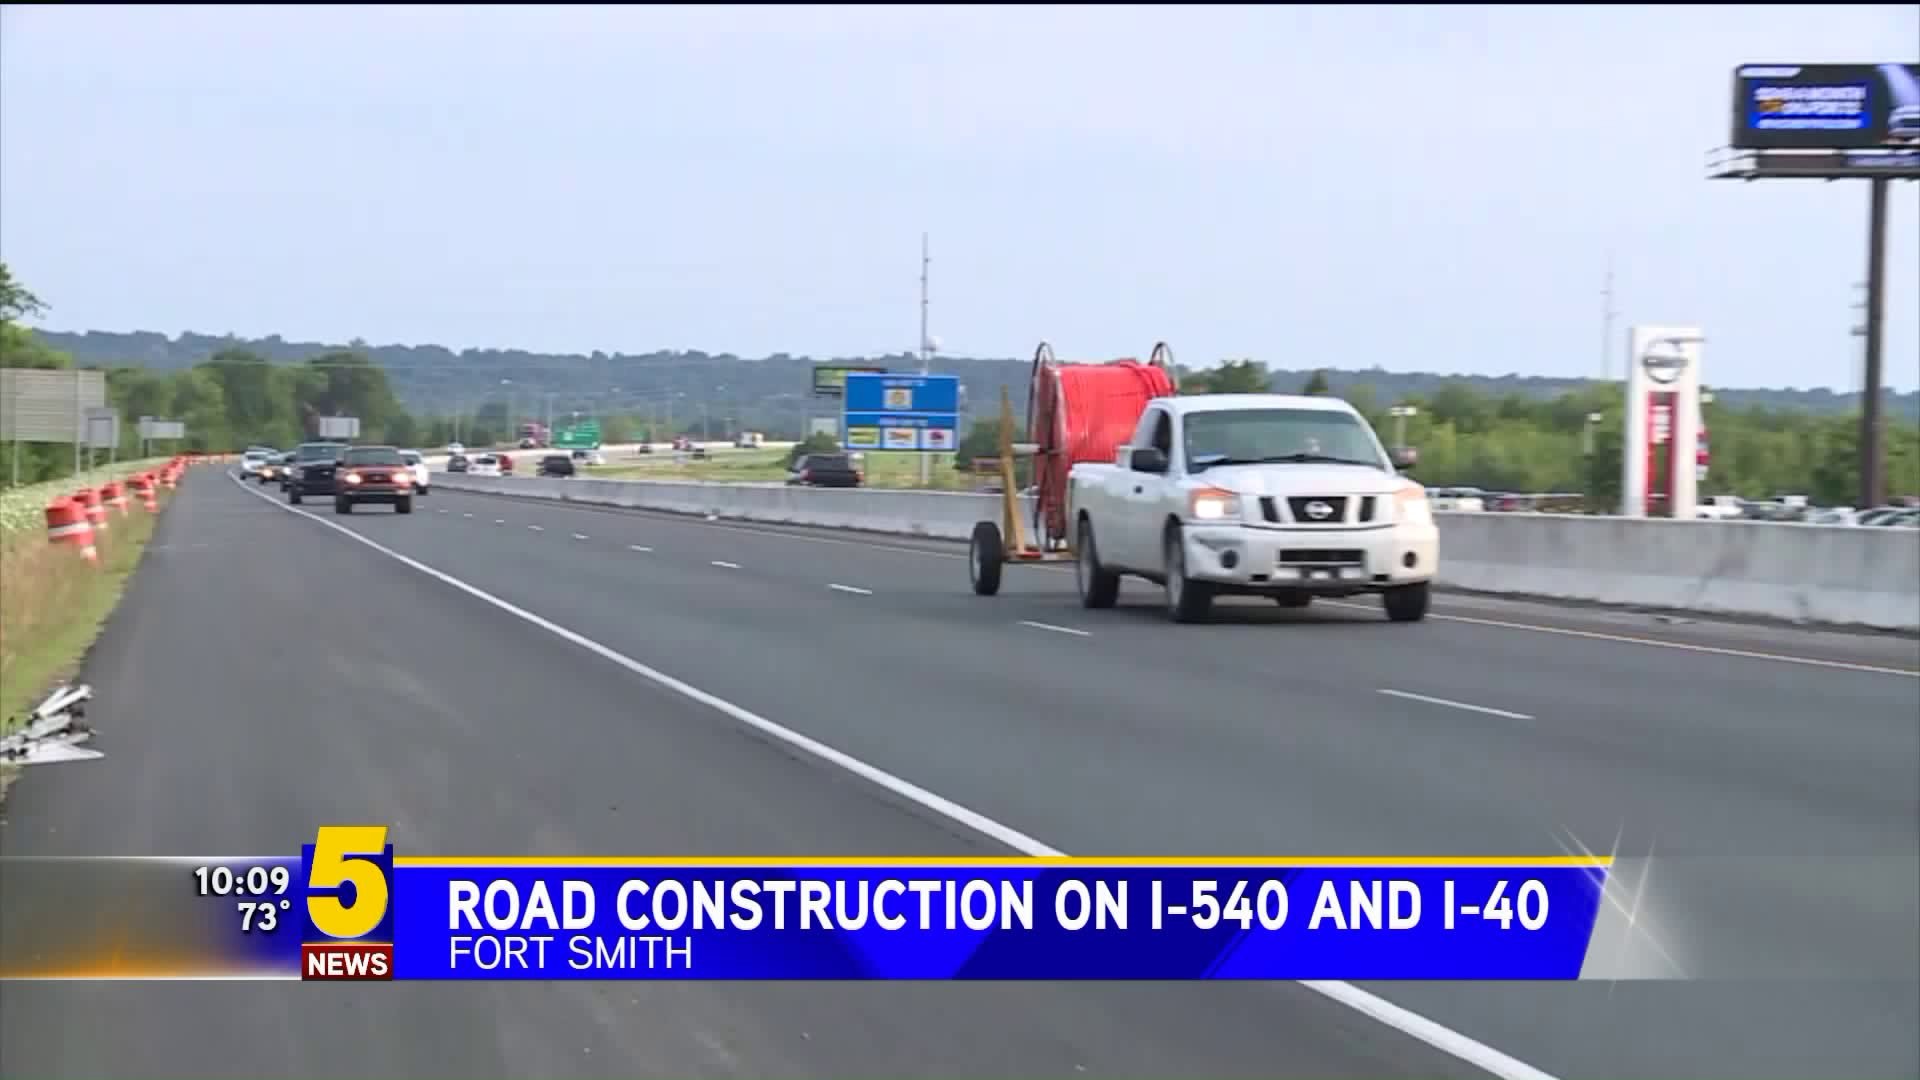 Road Construction on I-540 and I-40